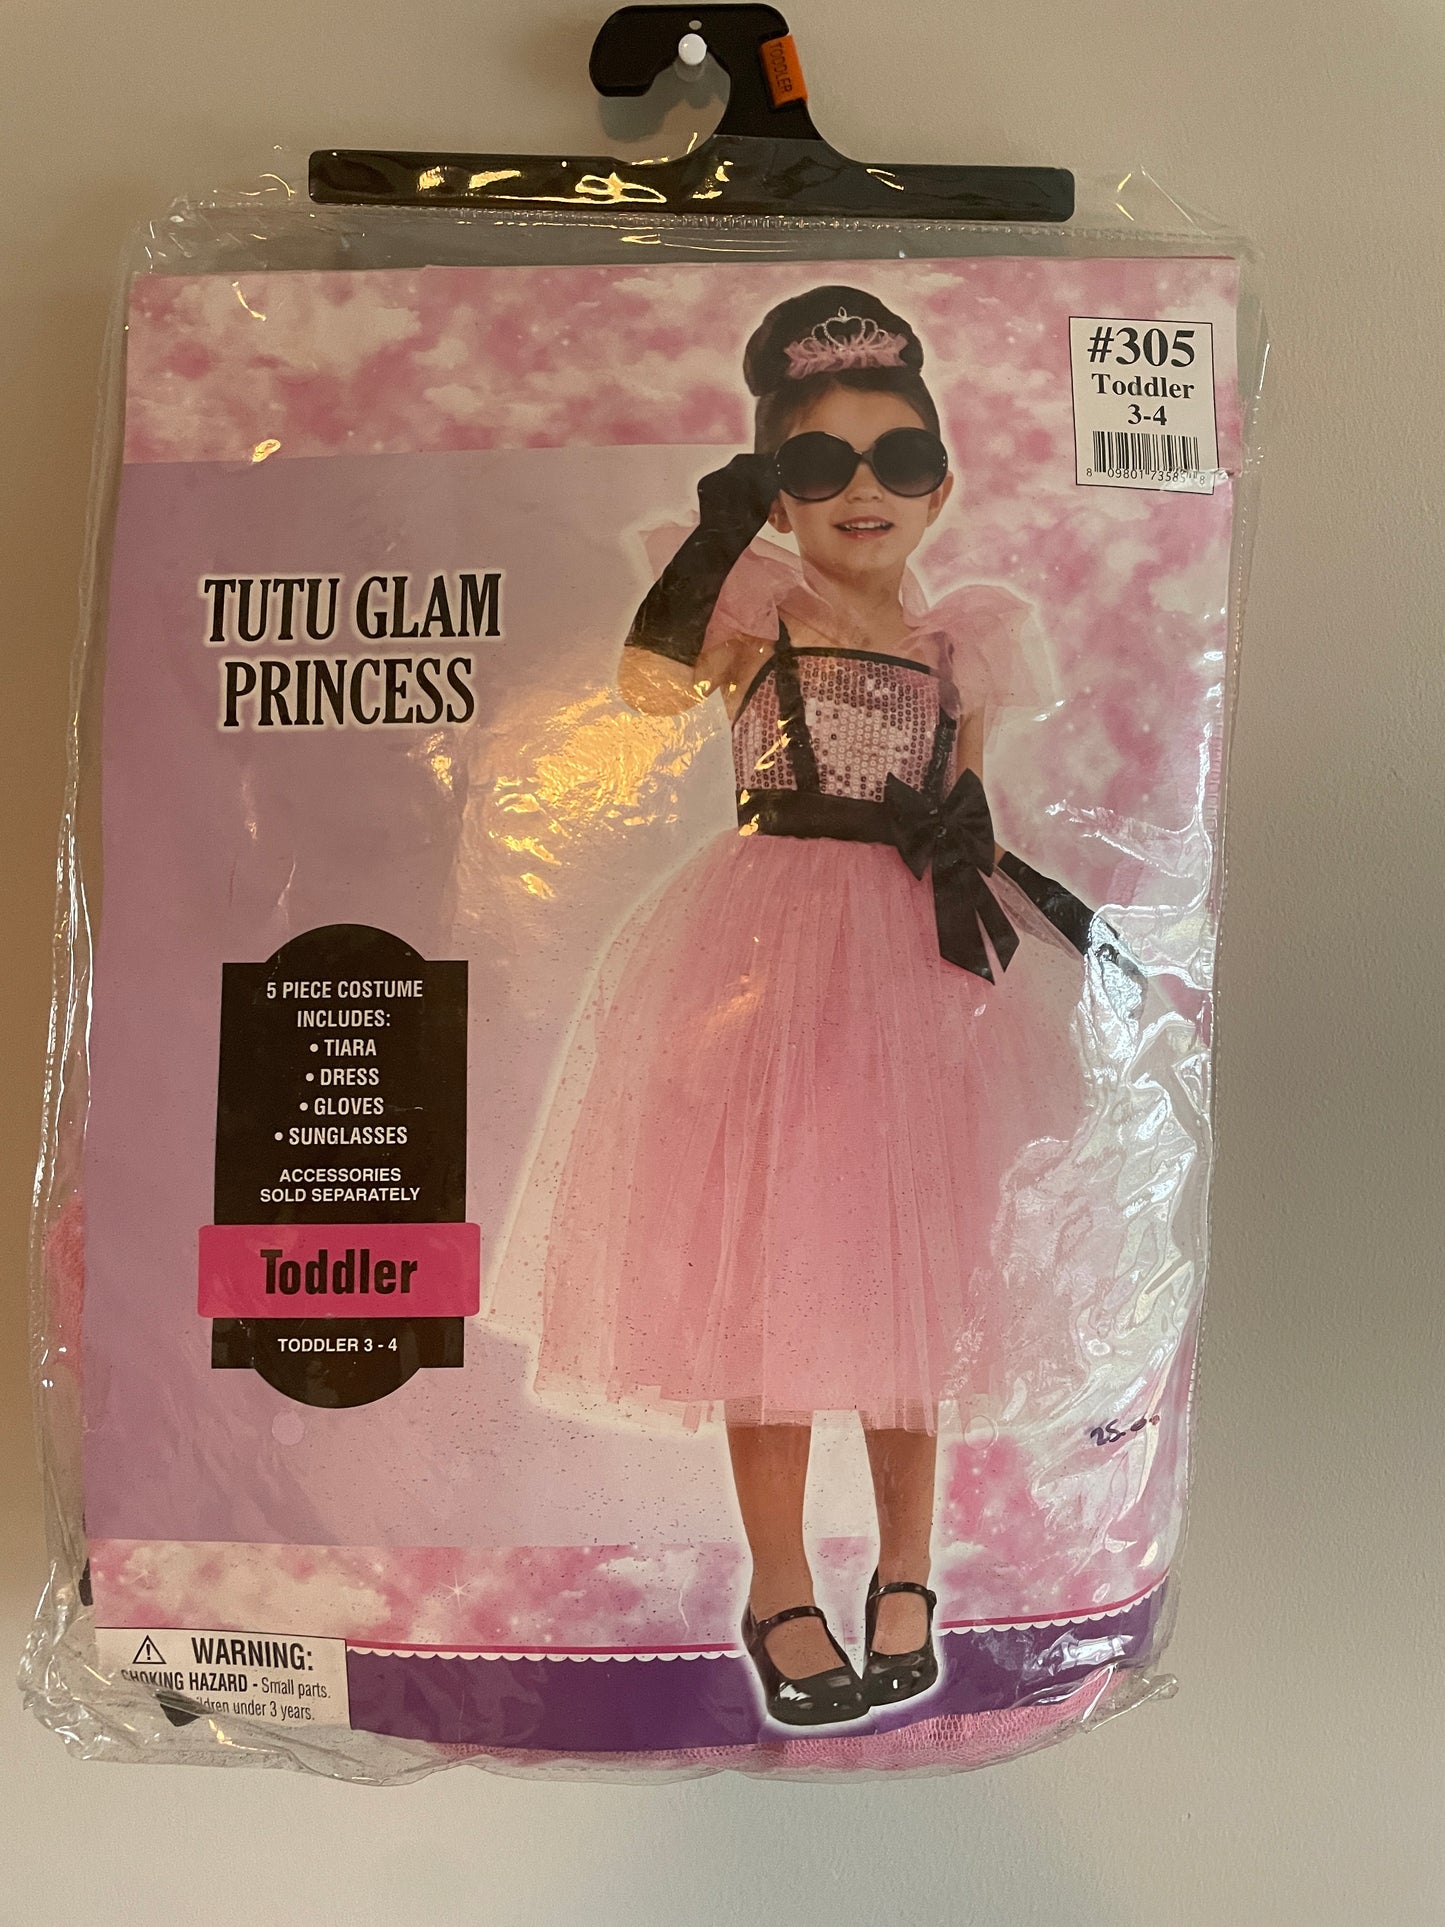 Tutu Glam Princess costume